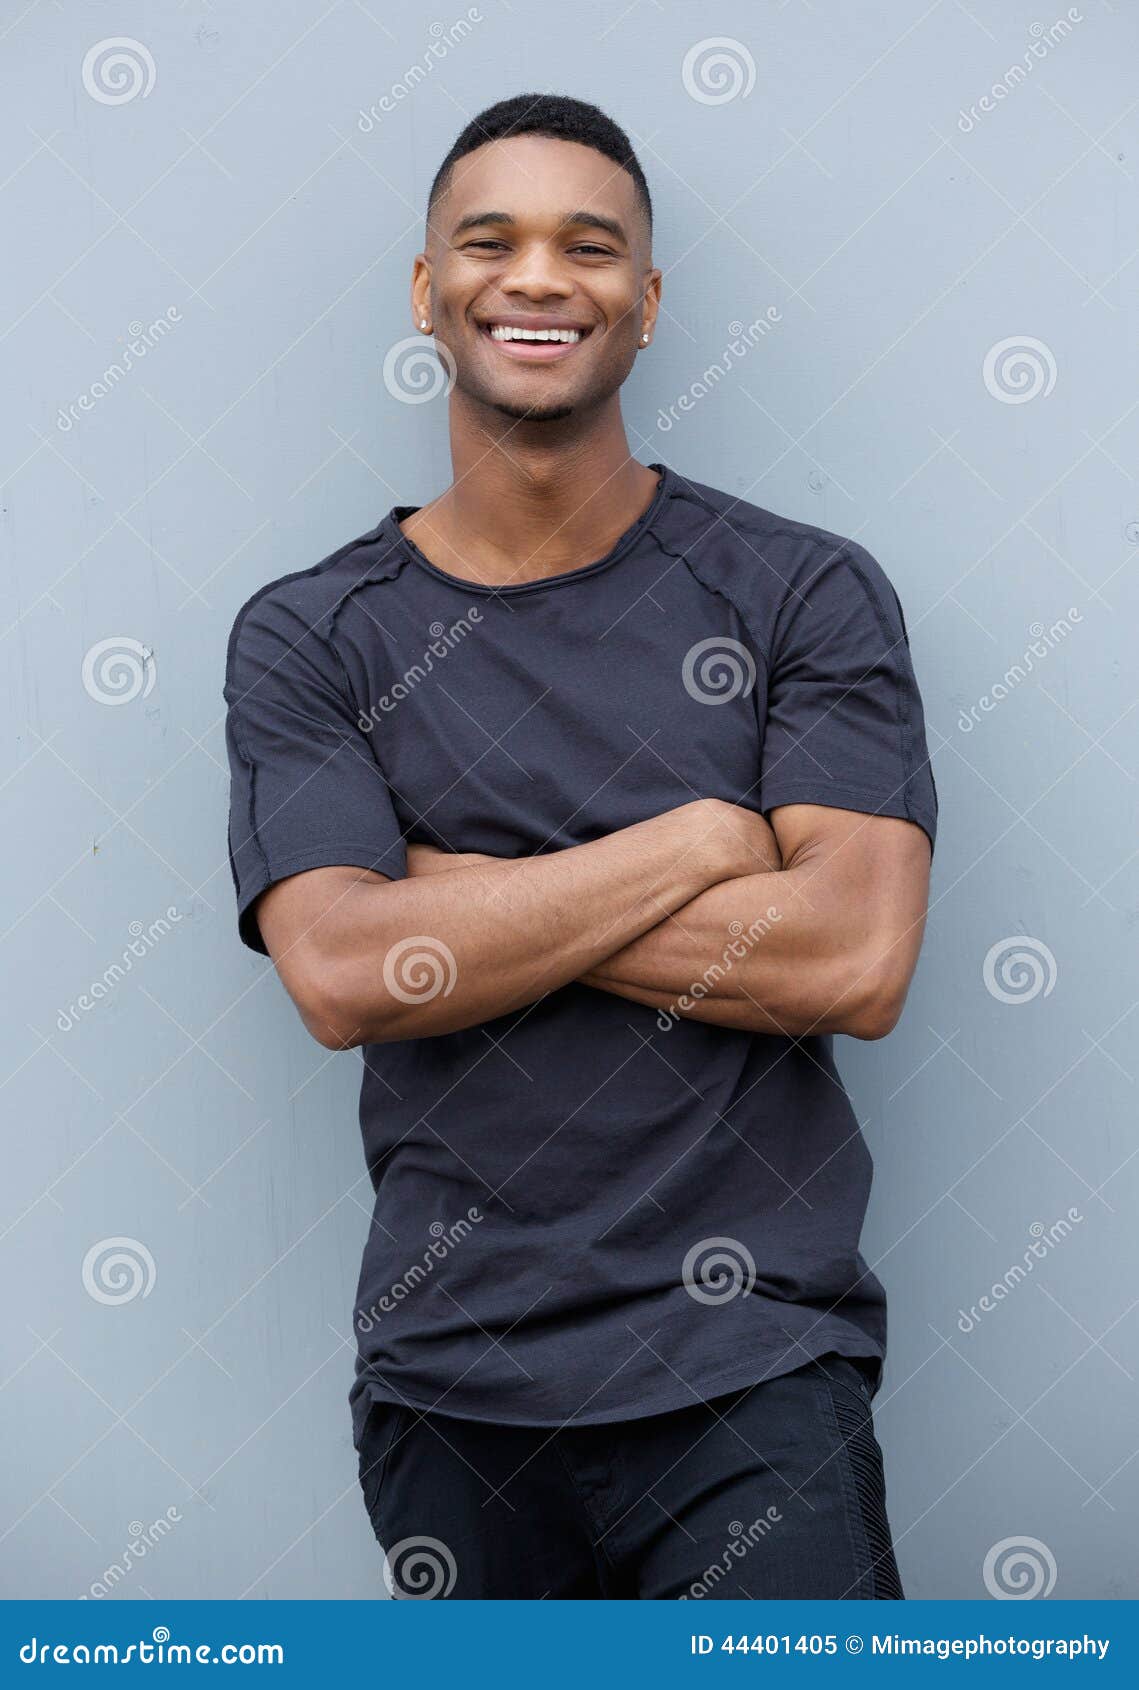 friendly-black-man-smiling-arms-crossed-portrait-against-gray-background-44401405.jpg